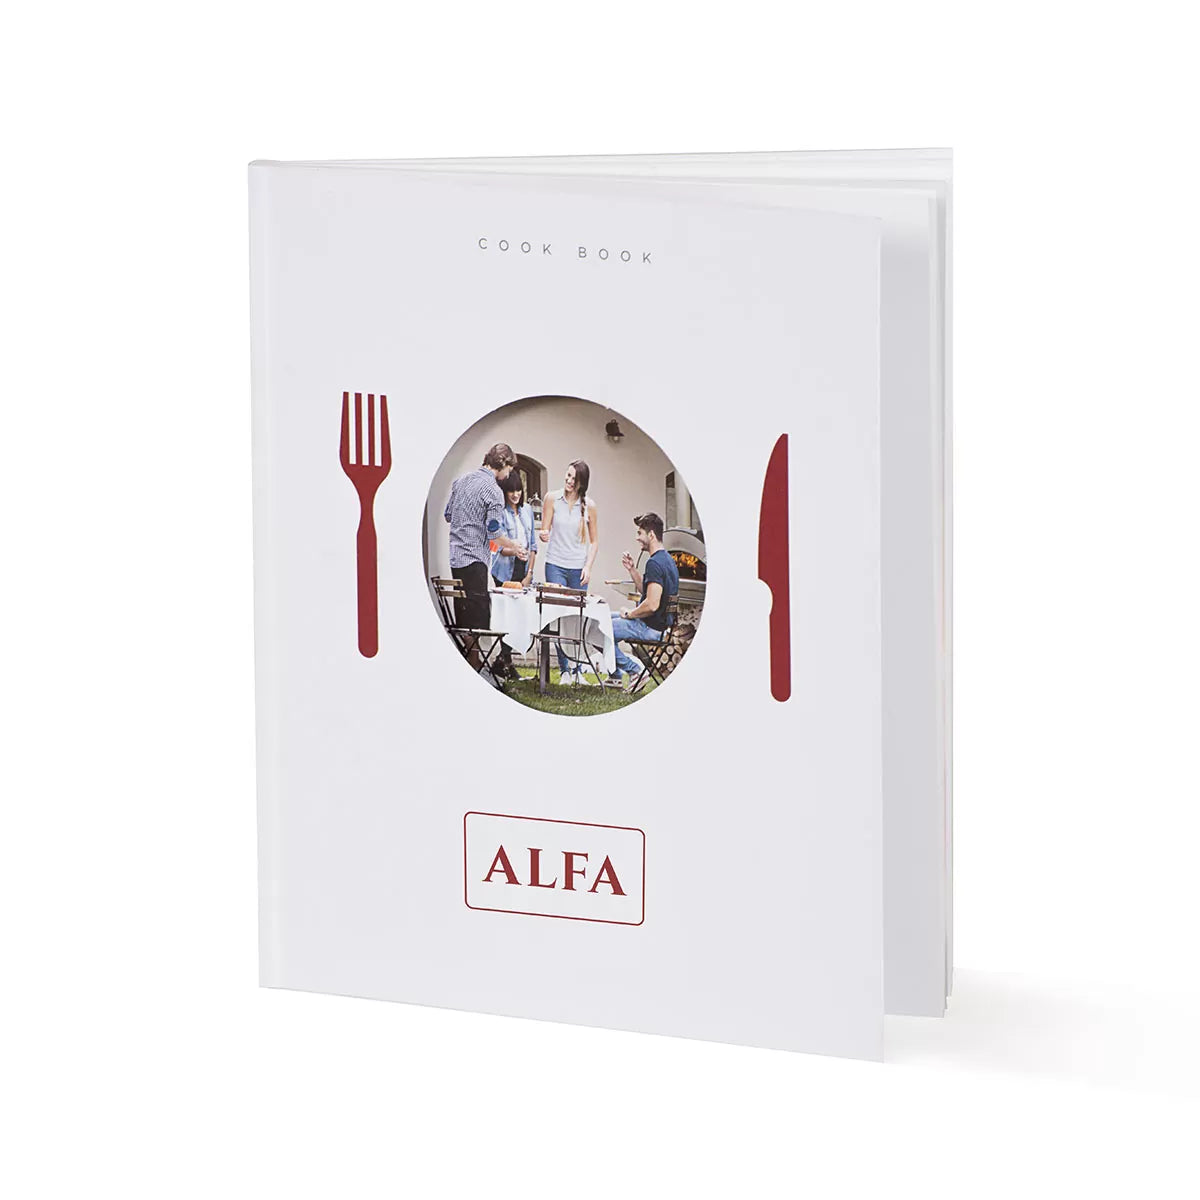 Alfa Cook Book